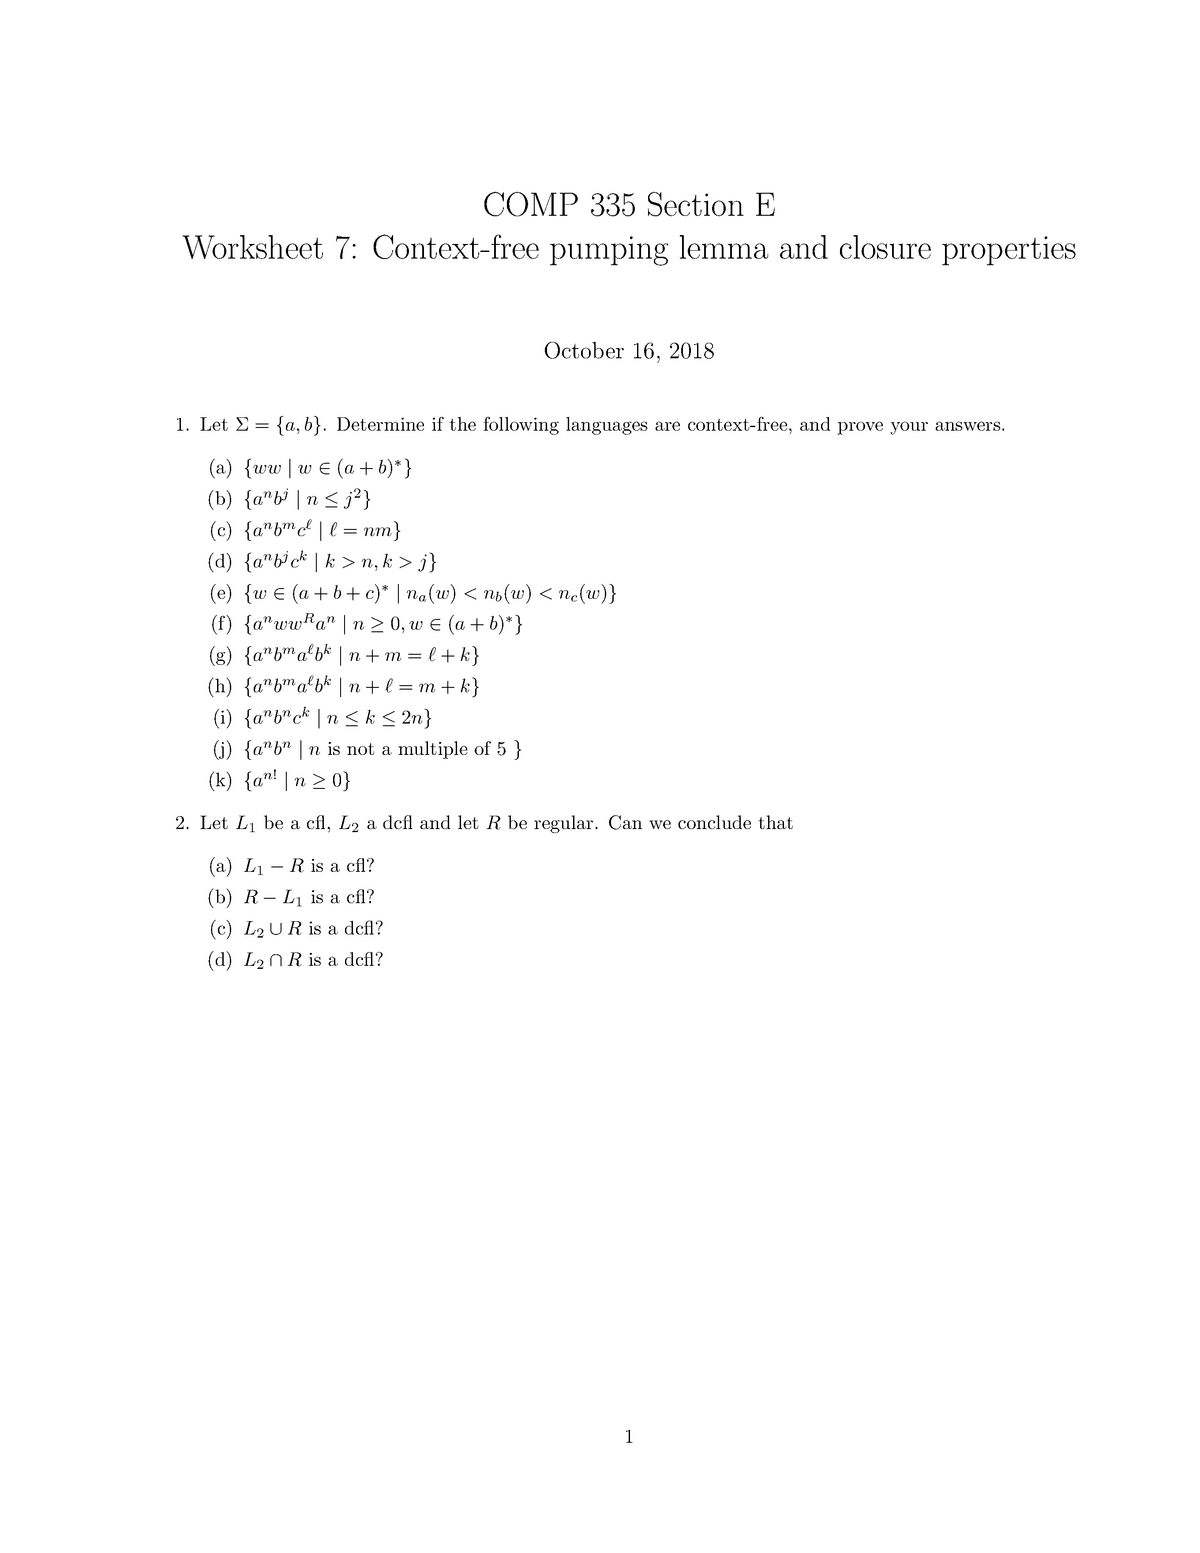 Worksheet Cfl Pumping Lemma Comp 335 Section Worksheet Pumping Lemma And Closure Studocu